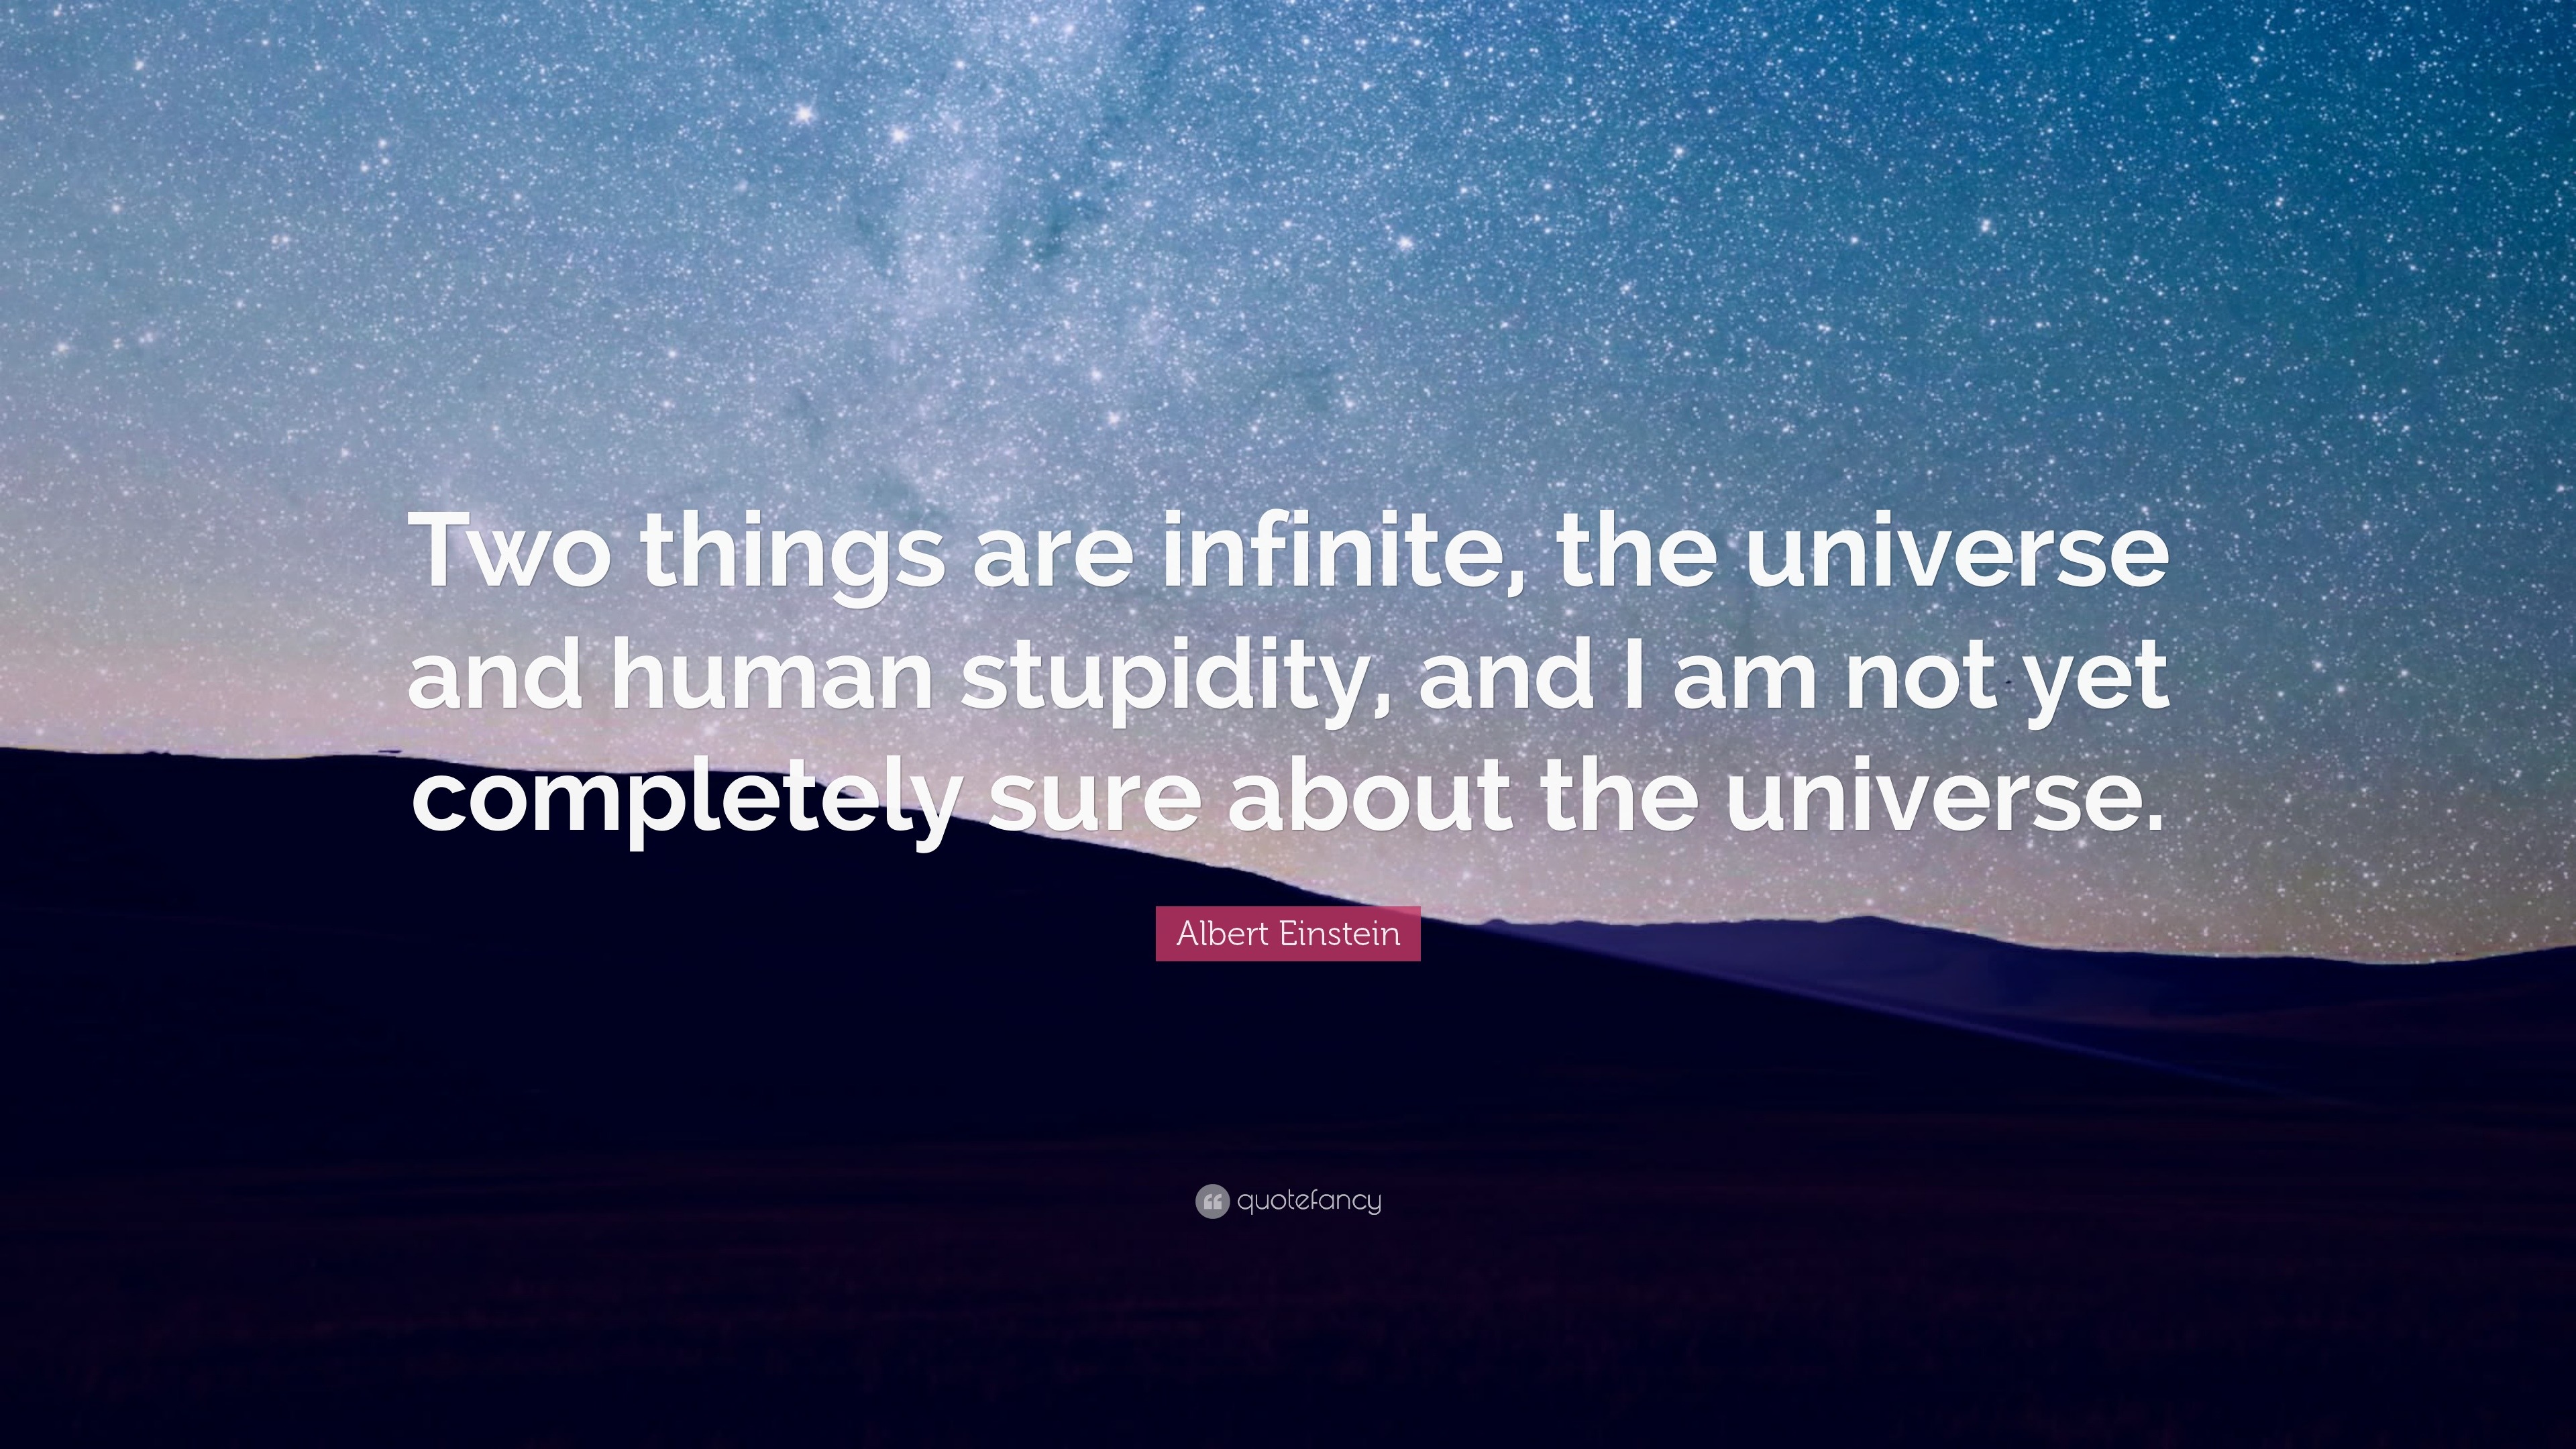 Is our universe finite or infinite? - Quora